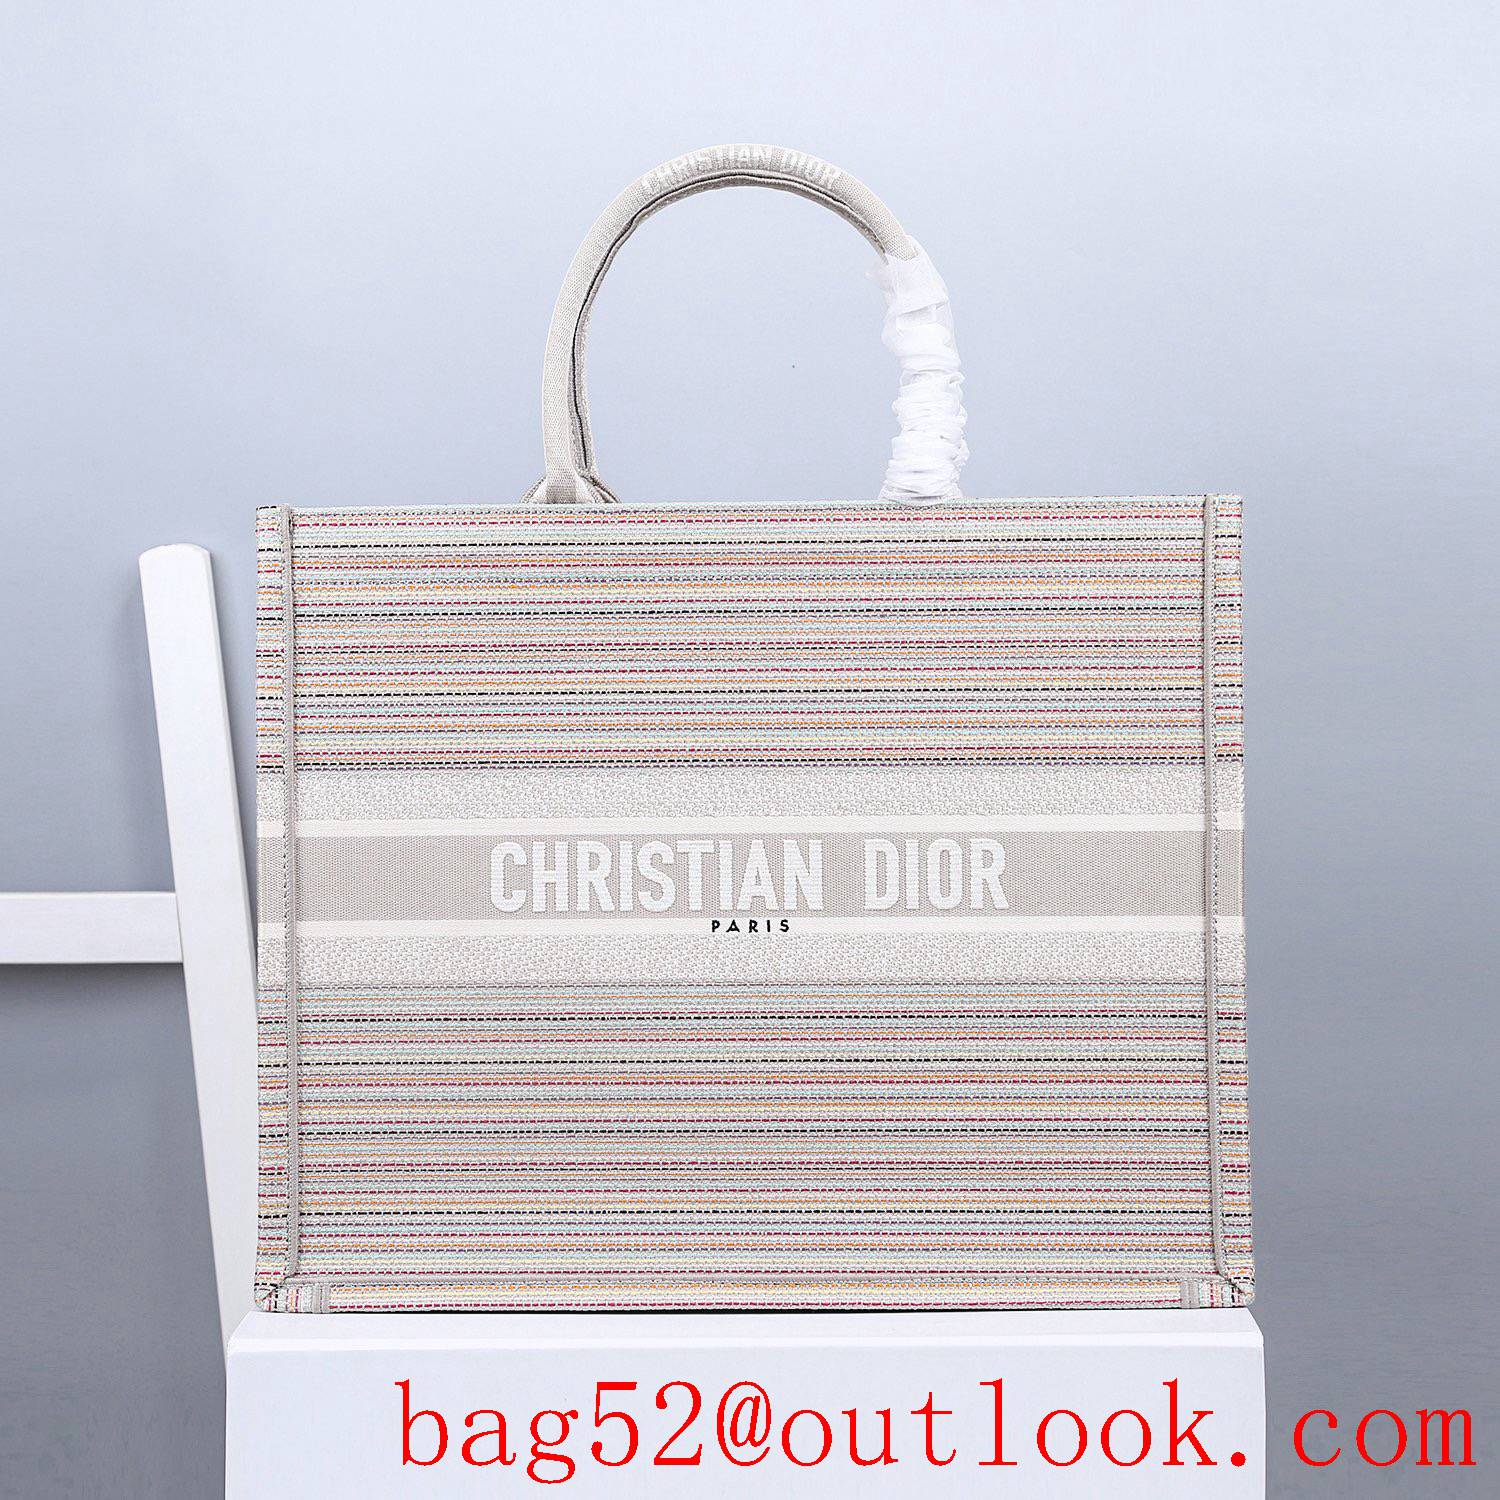 Dior multicolor stripes embroidery cream book tote large bag